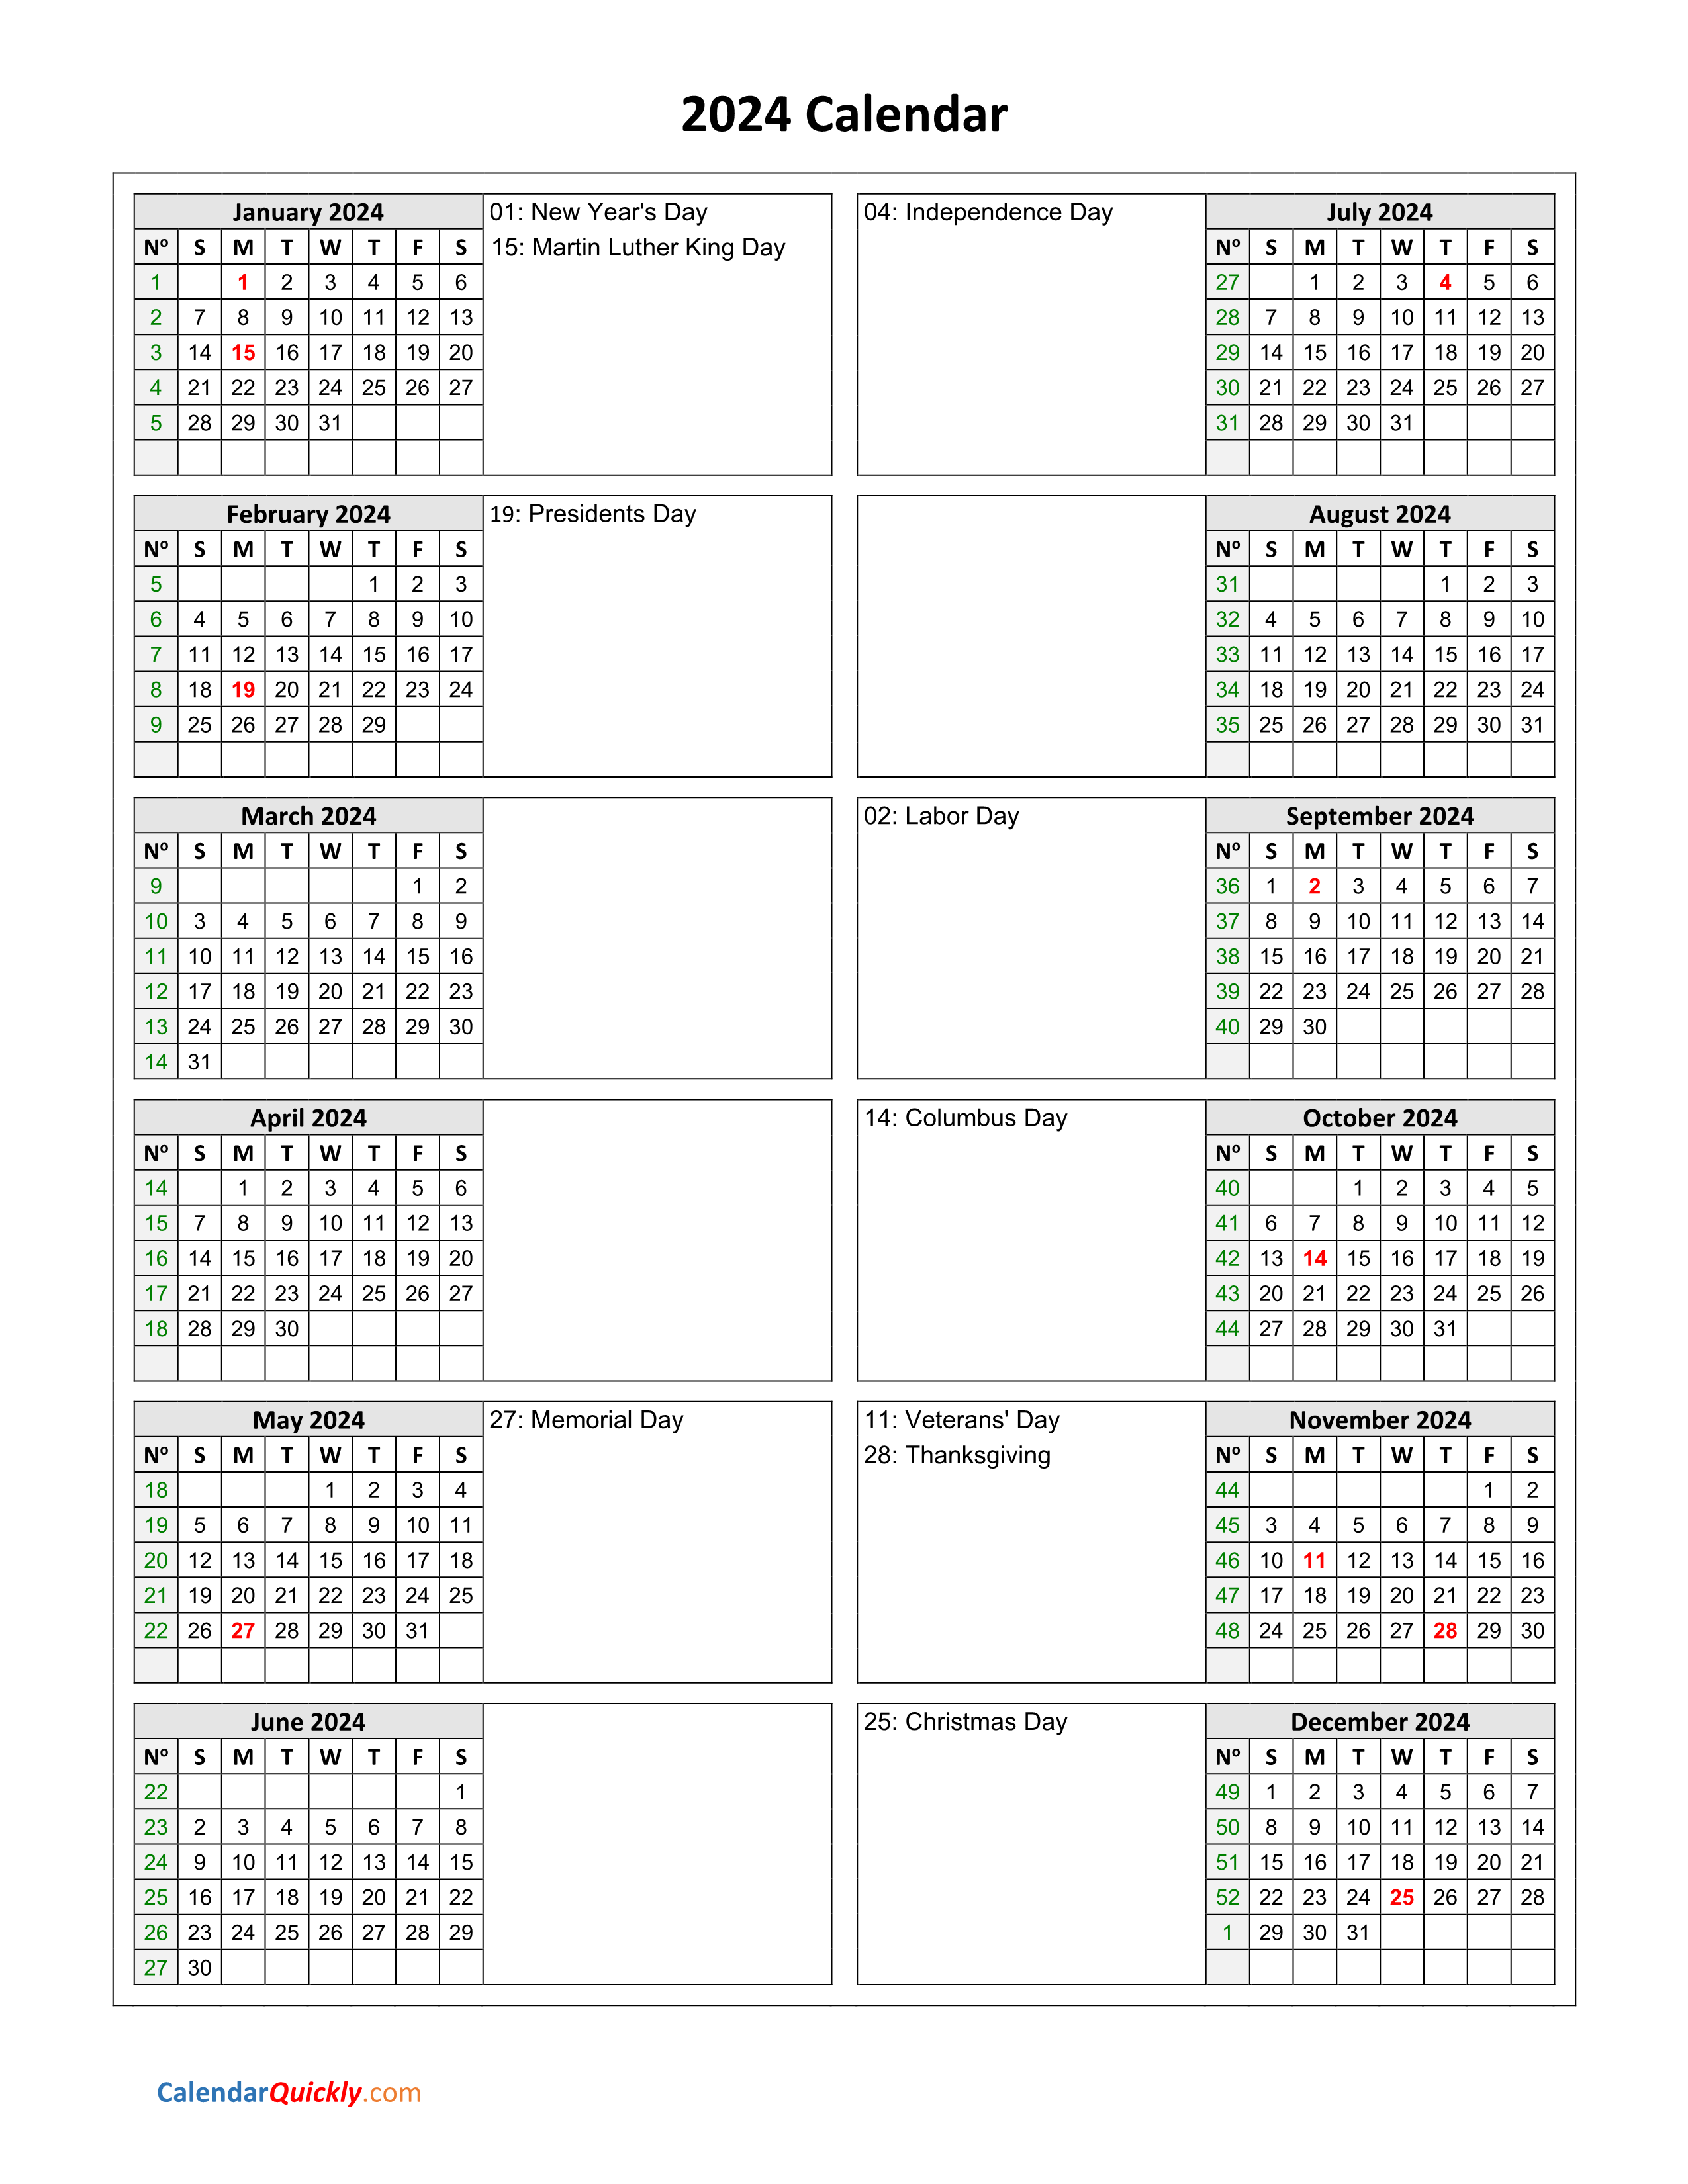 Holidays Calendar 2024 Vertical Calendar Quickly | Free Printable 2024 Vertical Monthly Calendar With Holidays